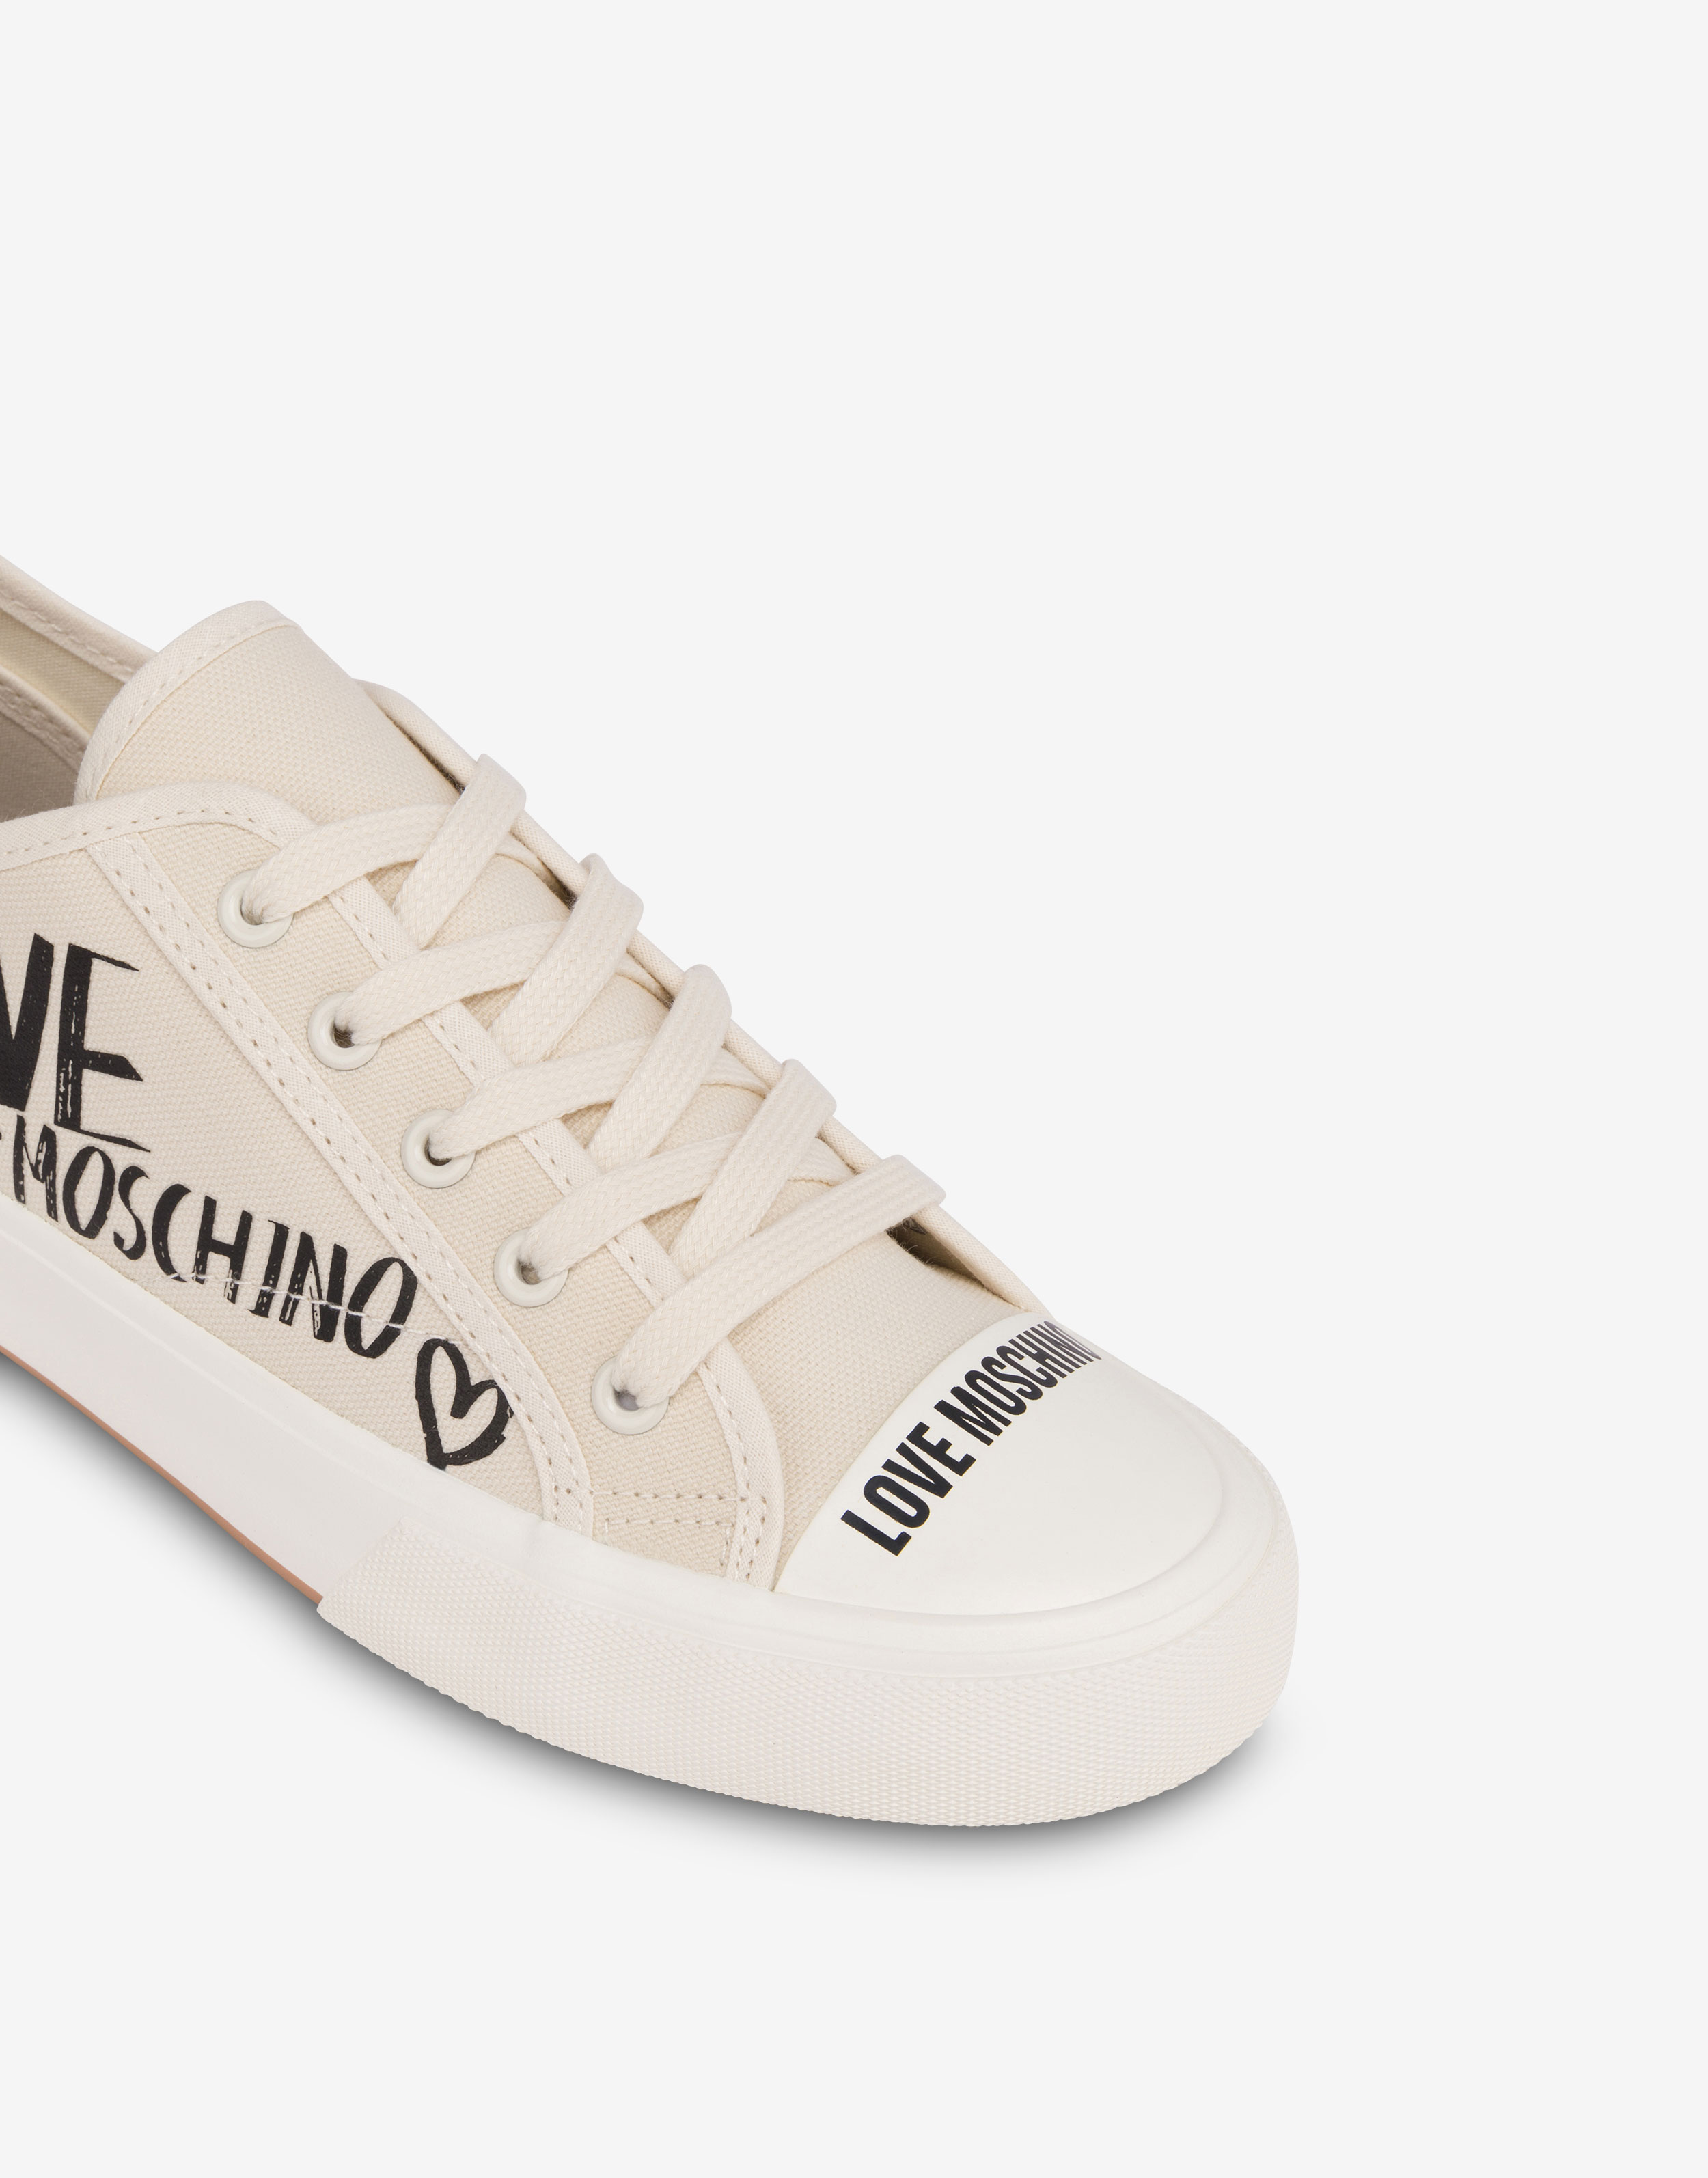 Love Moschino Sneakers Women JA15012G1CILV000 Lace Black 158,4€